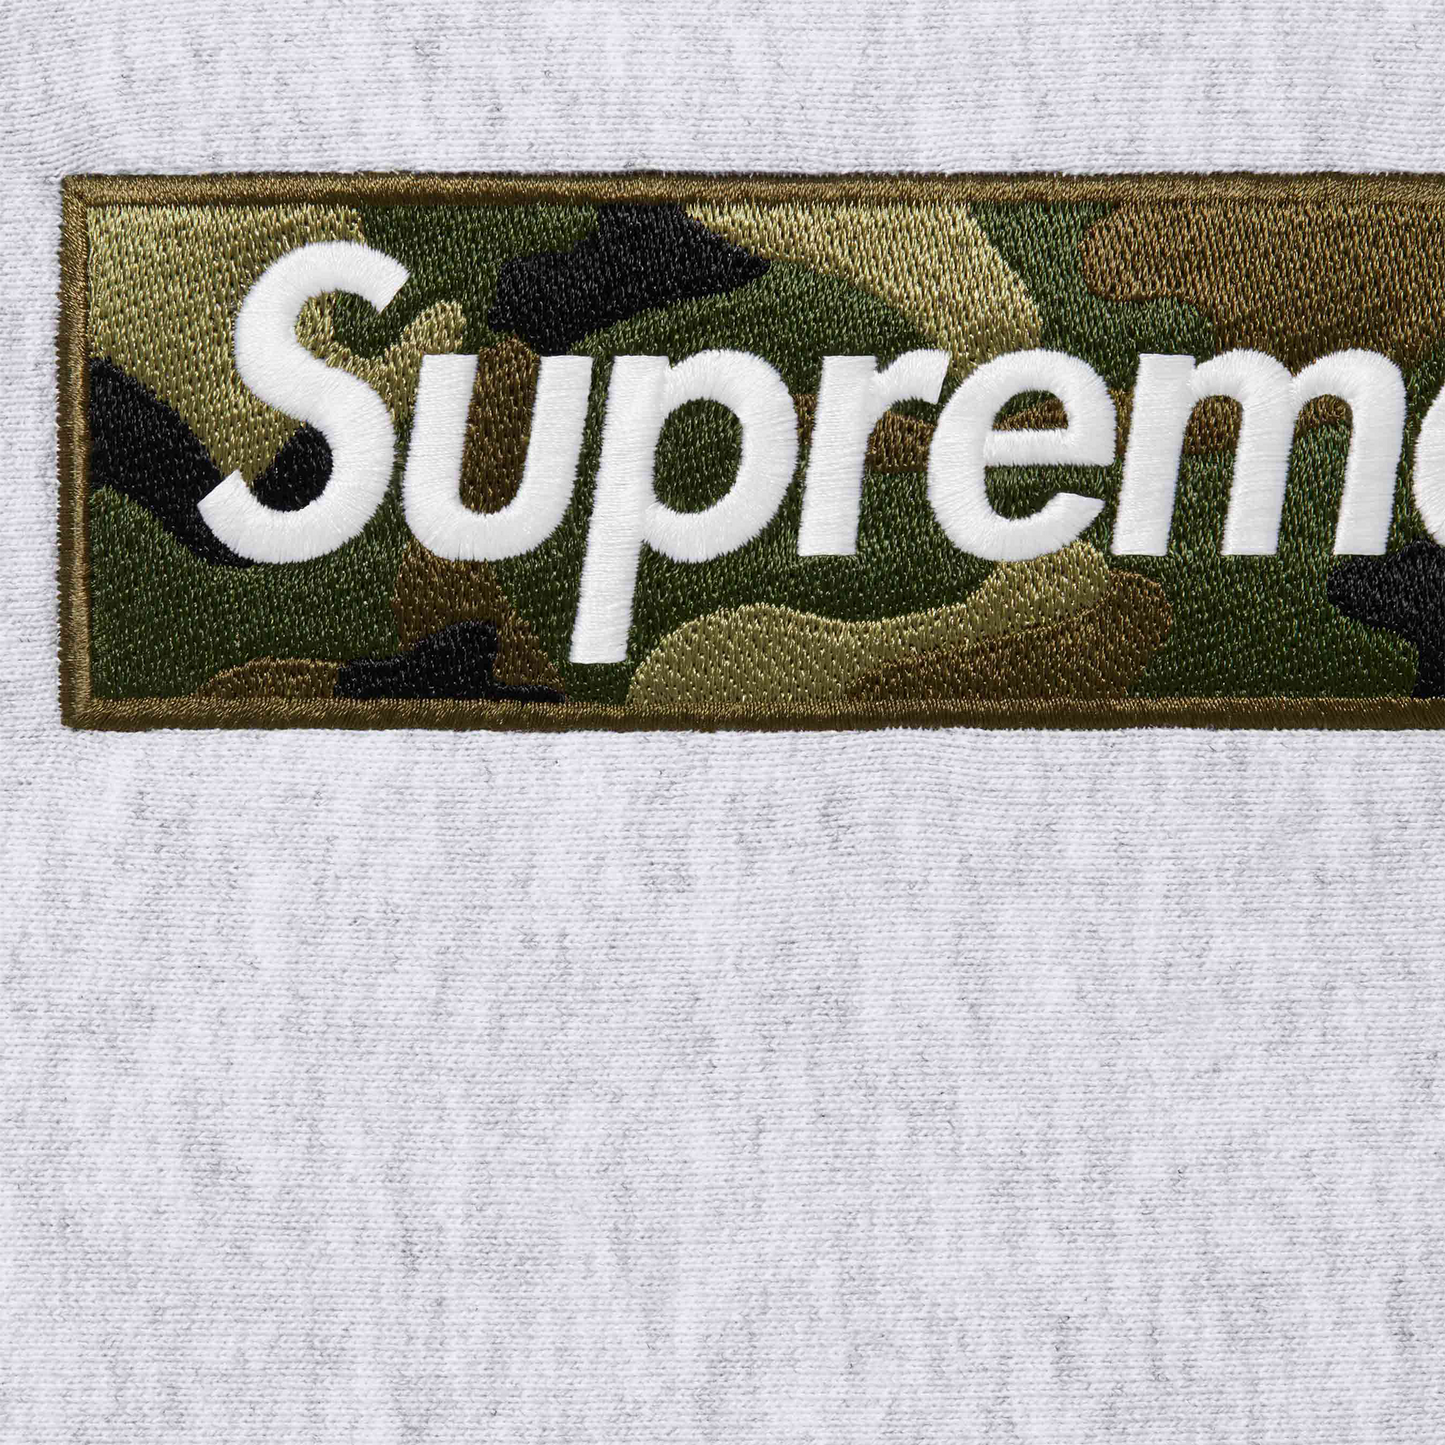 Supreme Box Logo Hooded Sweatshirt Ash Grey (FW23)